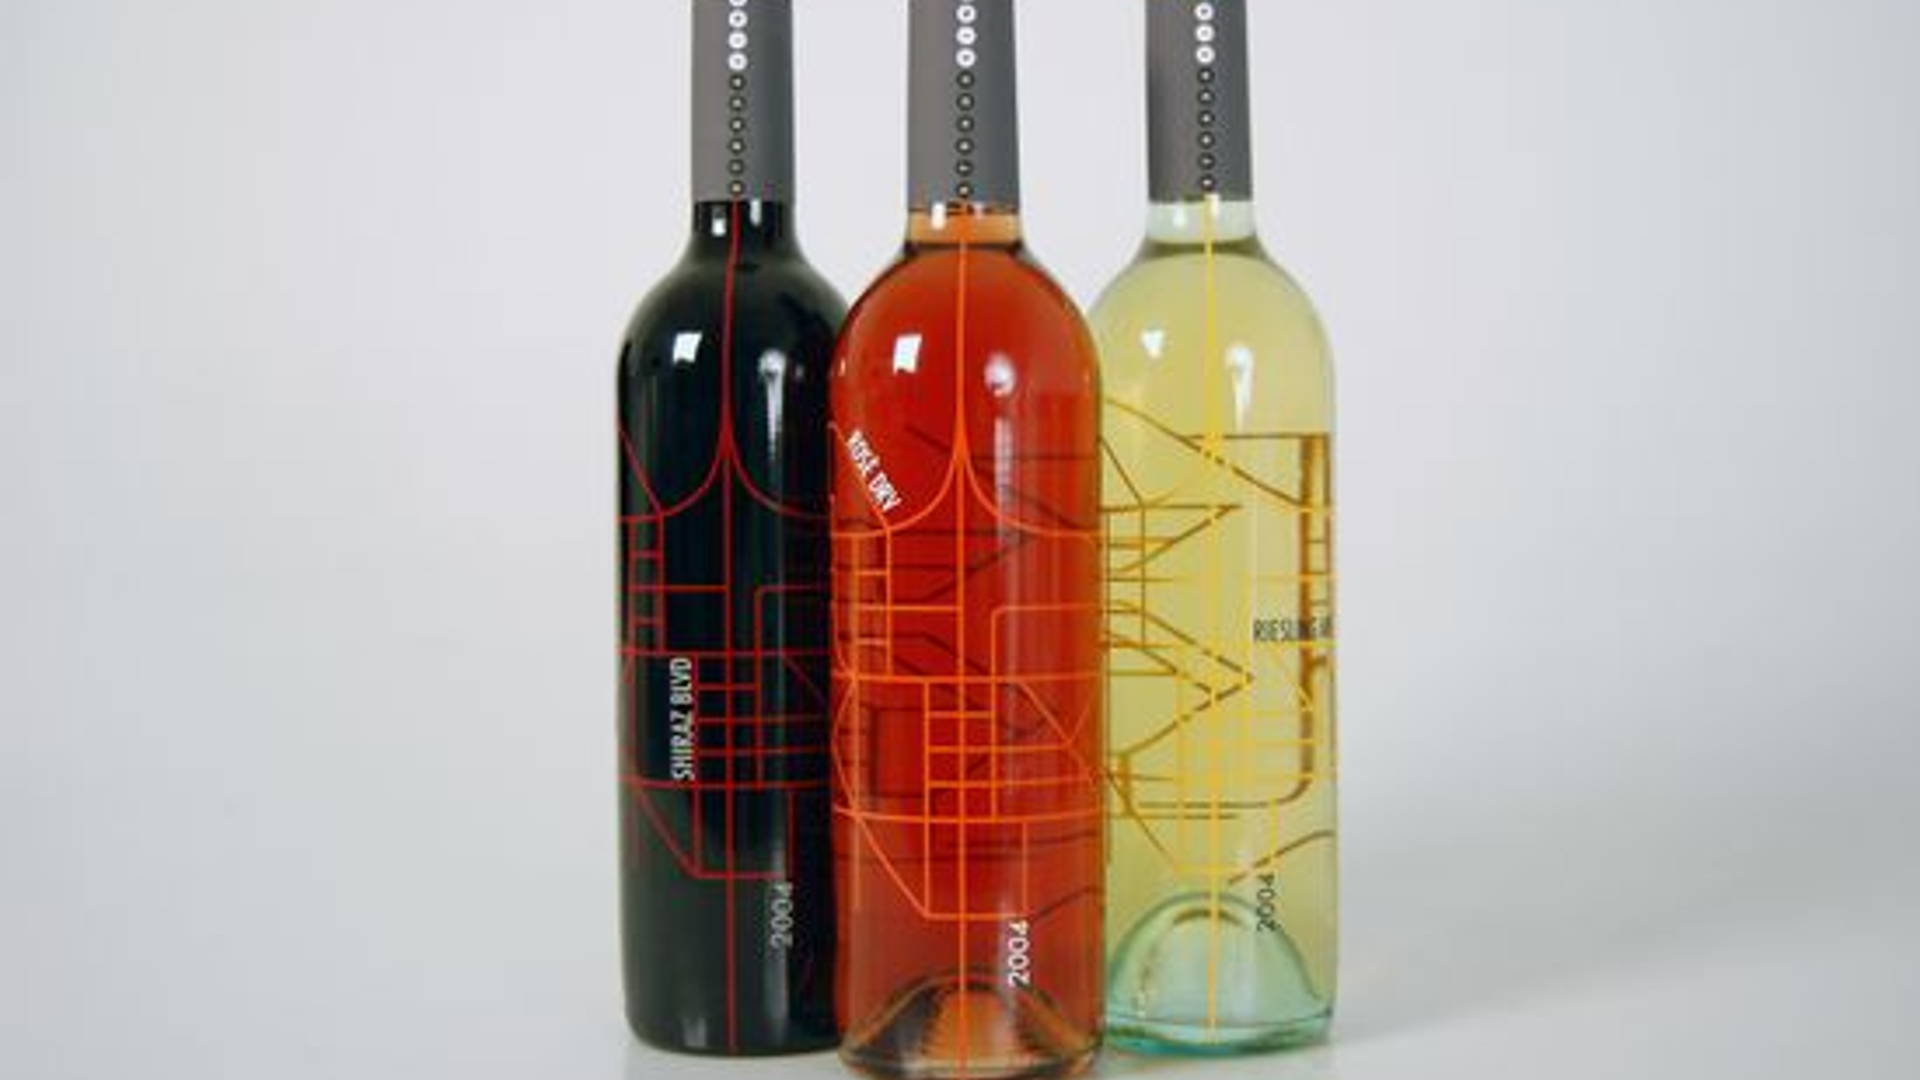 Featured image for Student Spotlight: Stradavino Wine